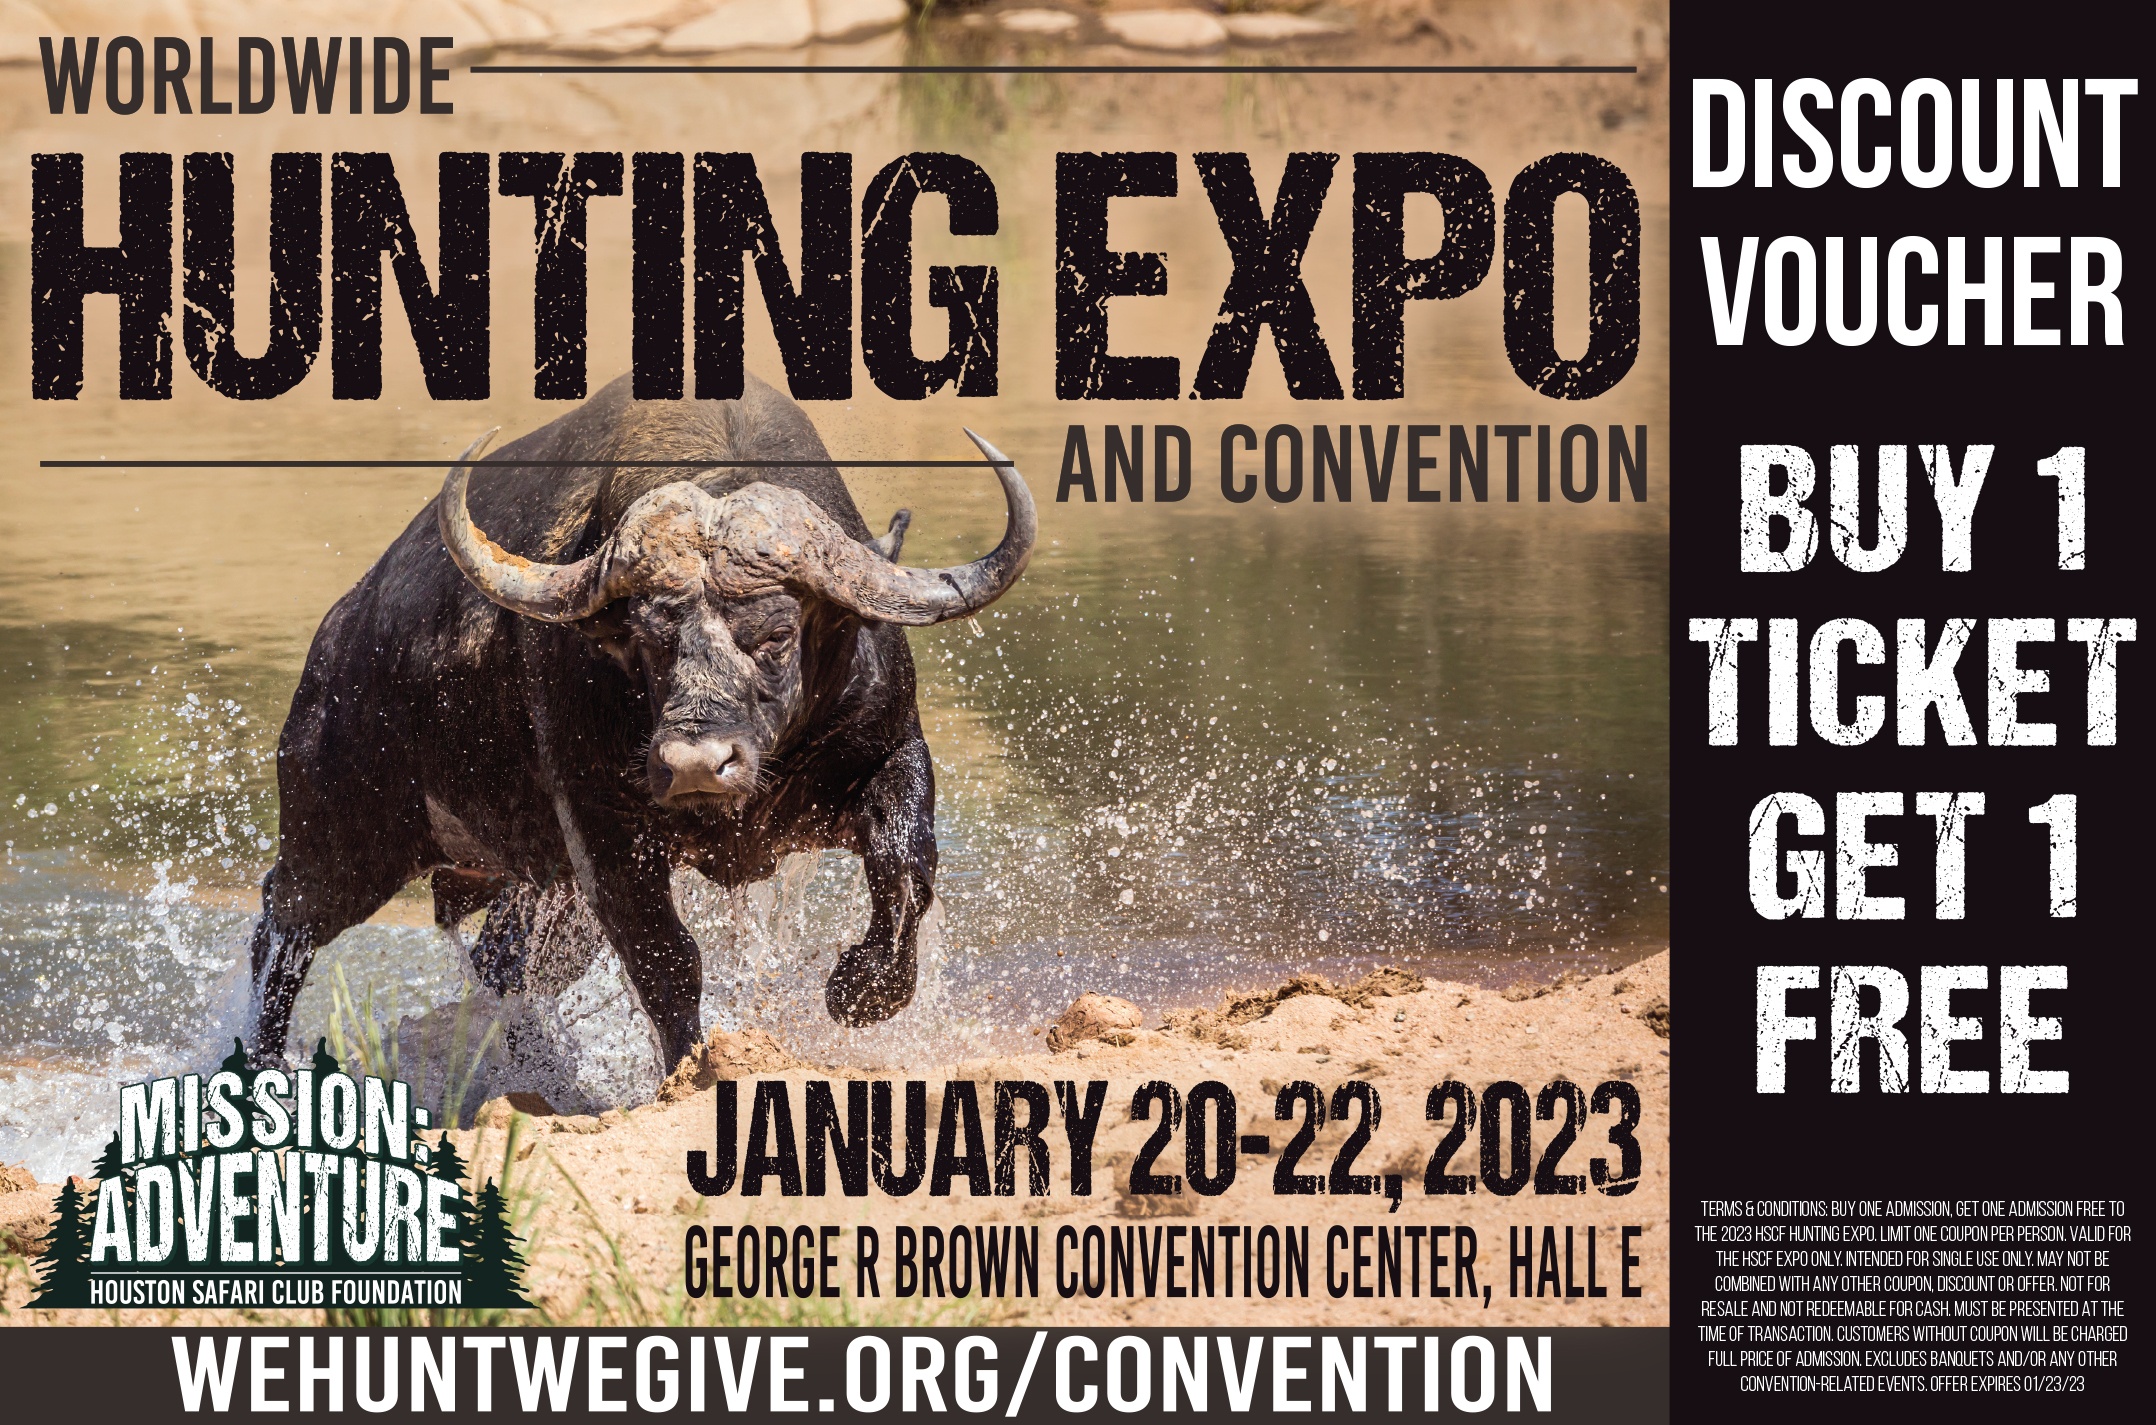 HSCF's 2023 Worldwide Hunting Expo & Convention - Houston Safari Club